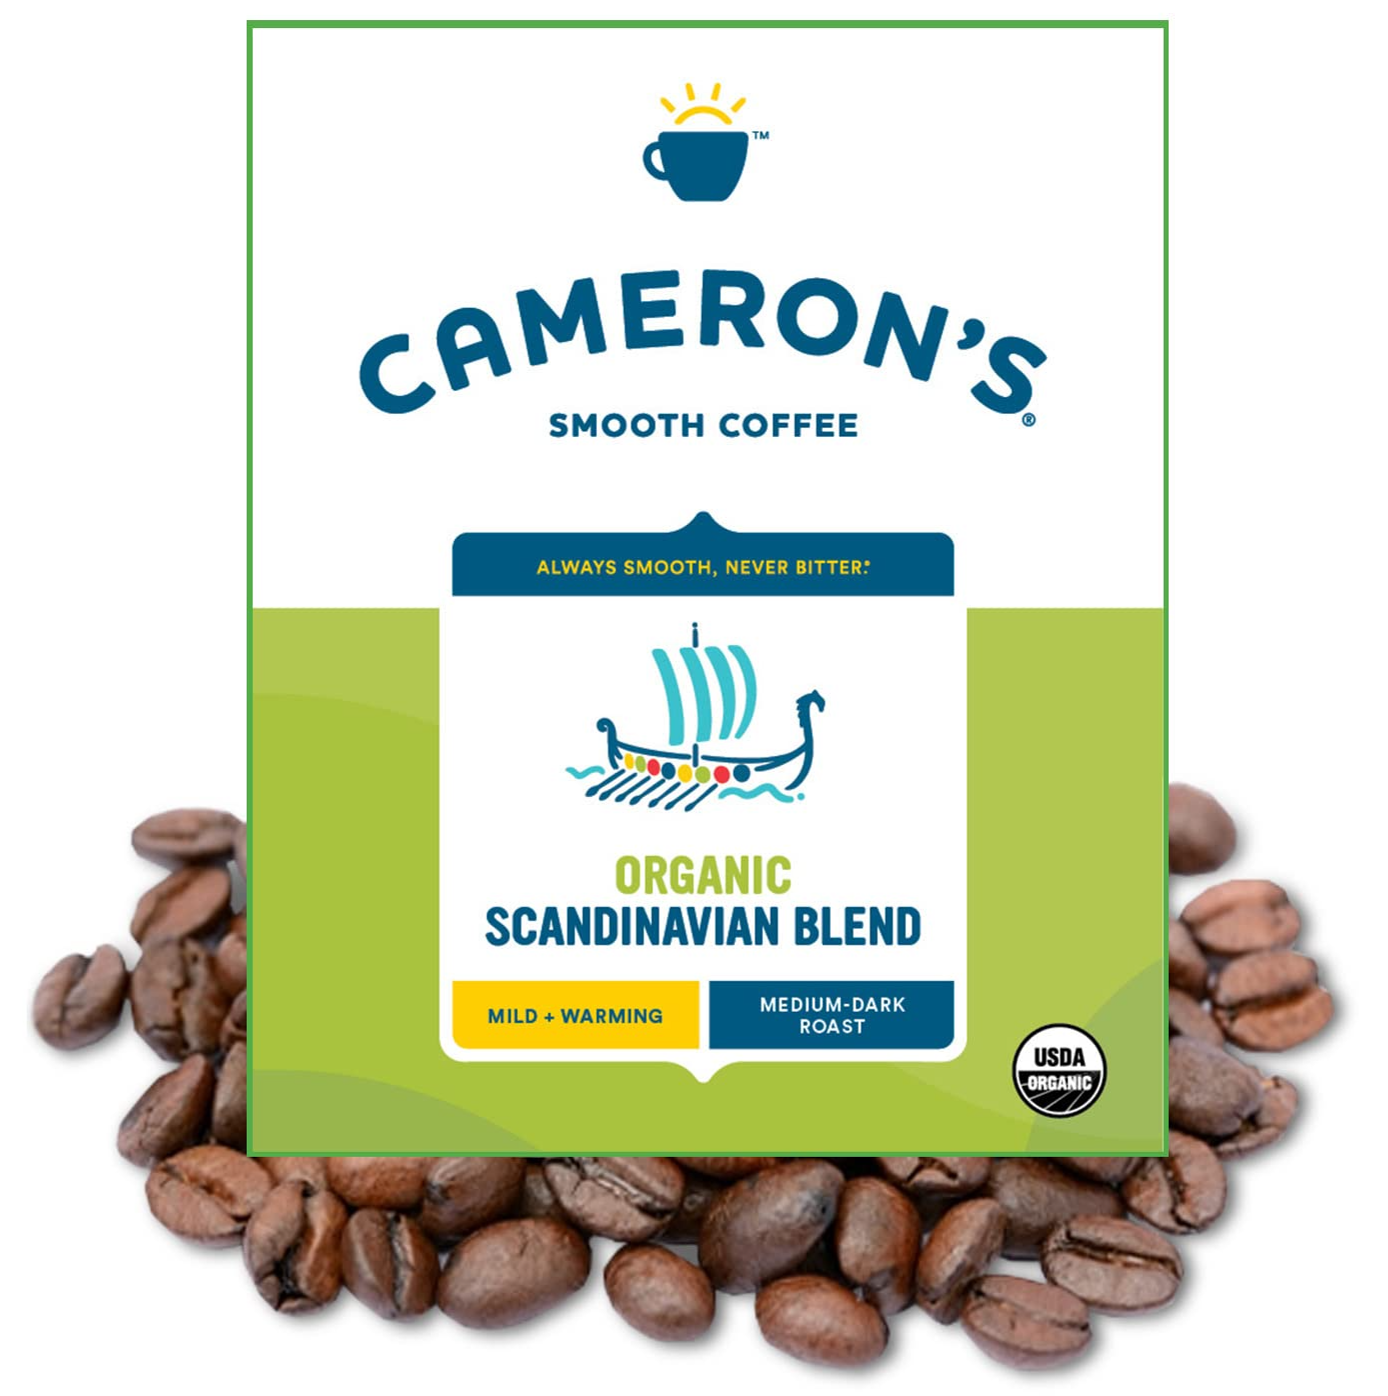 Cameron's Coffee Organic Scandinavian Blend 4lbs Bag, Whole Bean $22.21